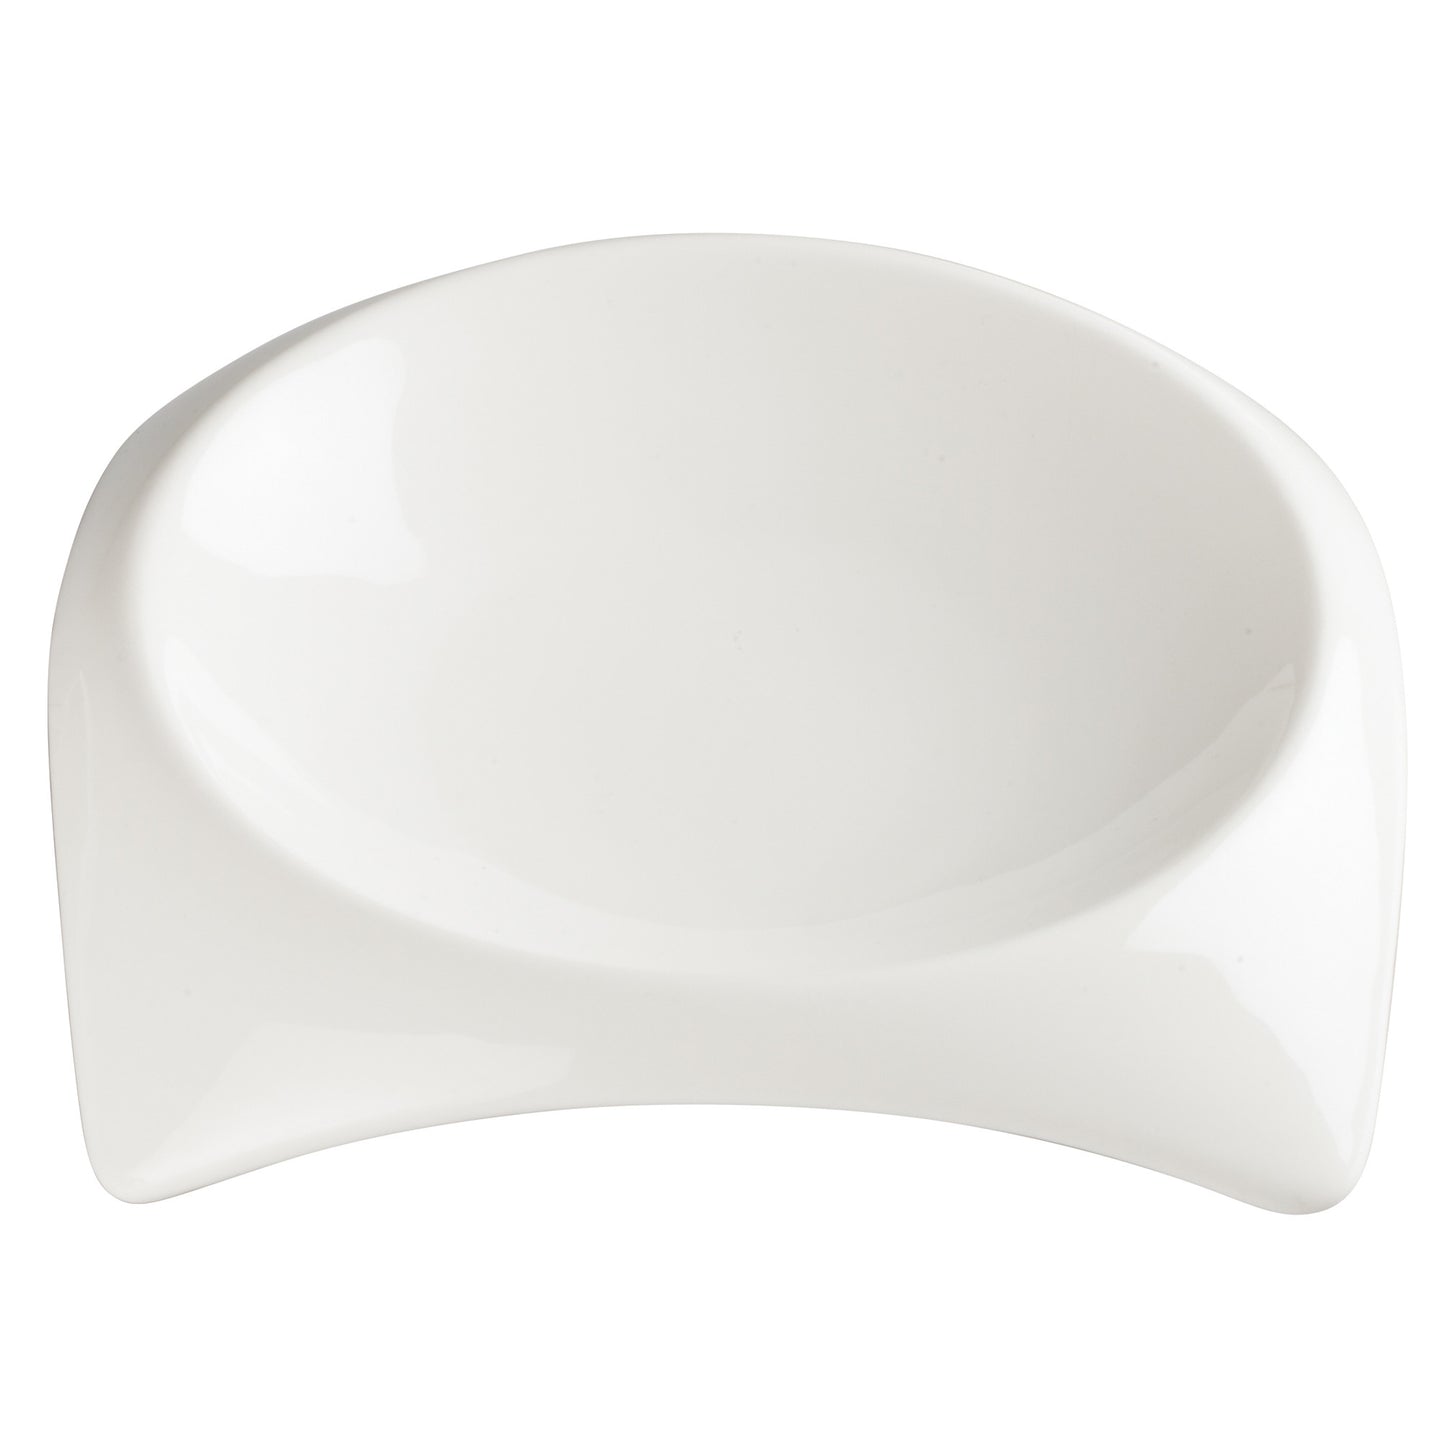 WDP005-101 - 6-1/4"Sq (5-1/2" Dia) Porcelain Square Deep Bowl, Bright White, 36 pcs/case